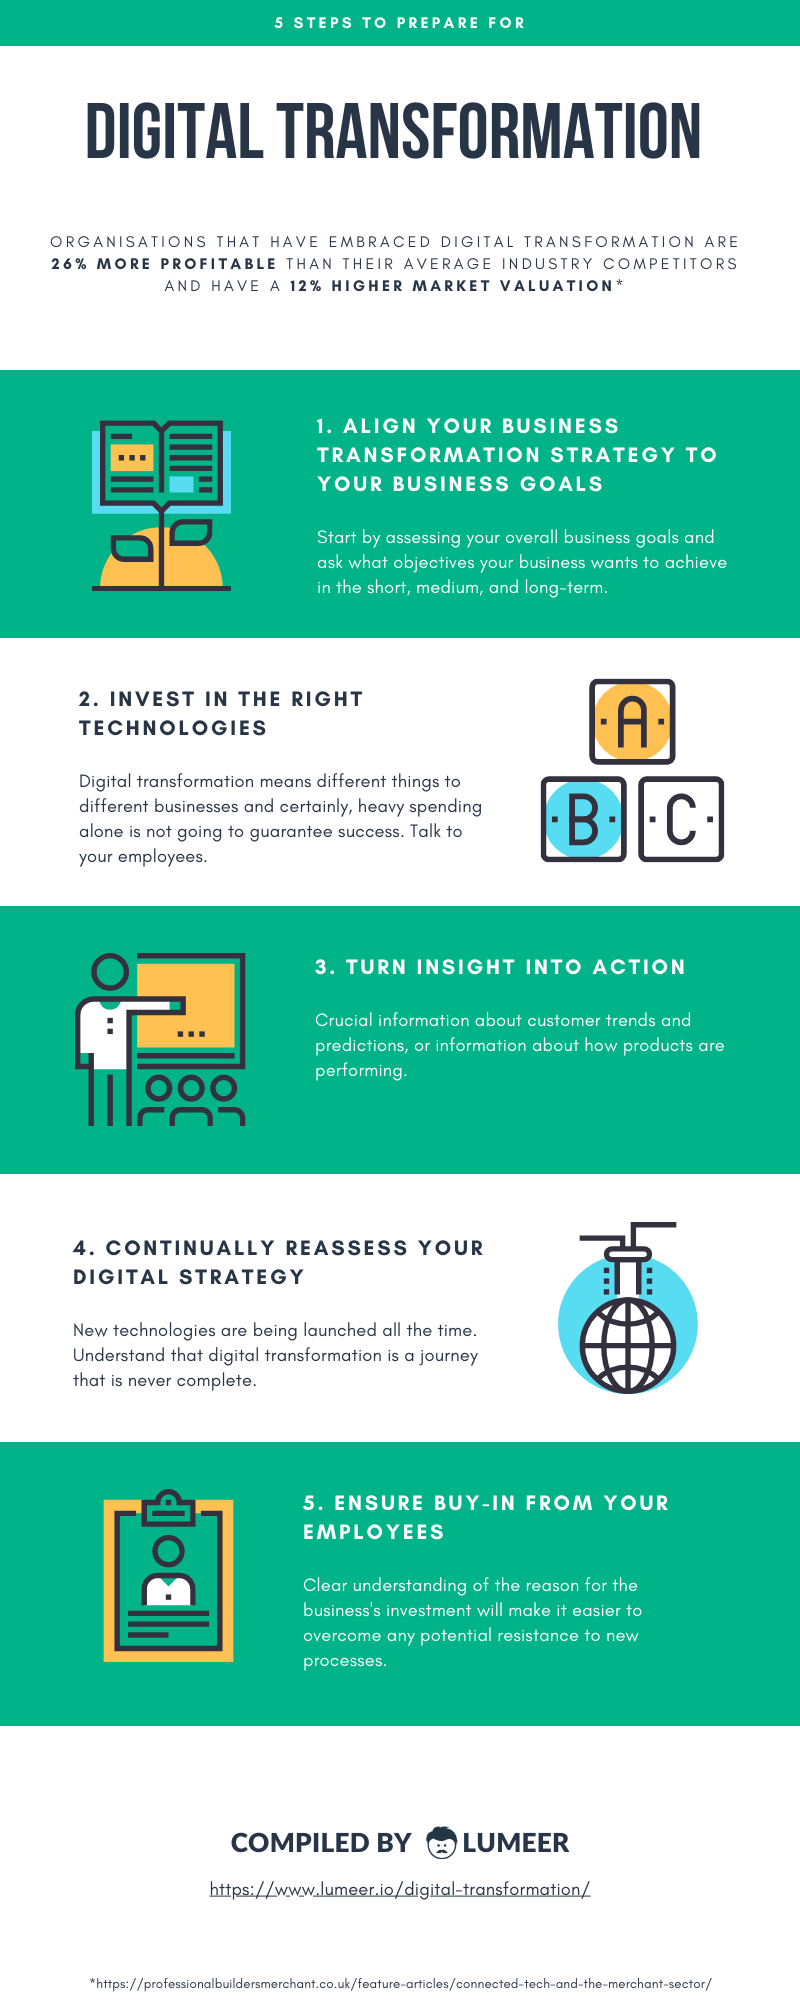 5 steps to digital transformation